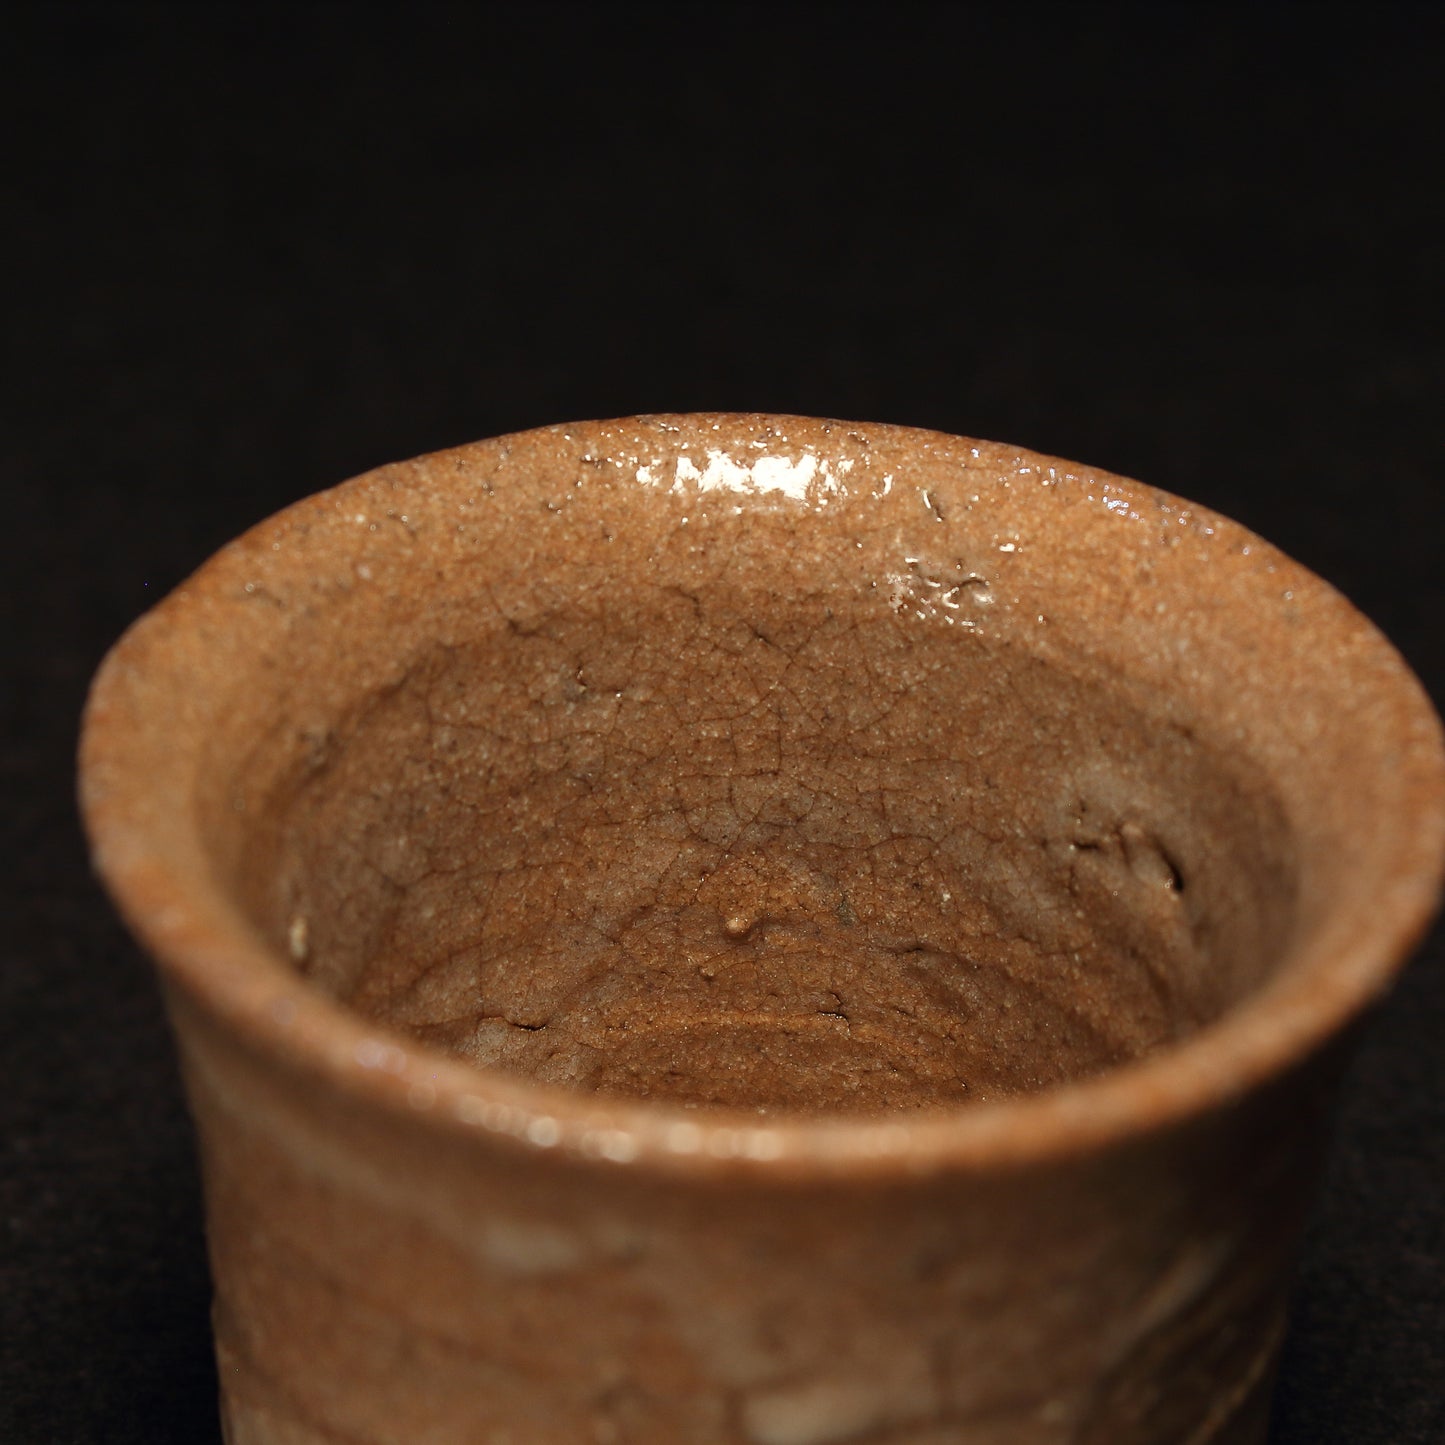 Karatsu ware | Naoki Kojima | Karatsu sake cup [one-of-a-kind item]